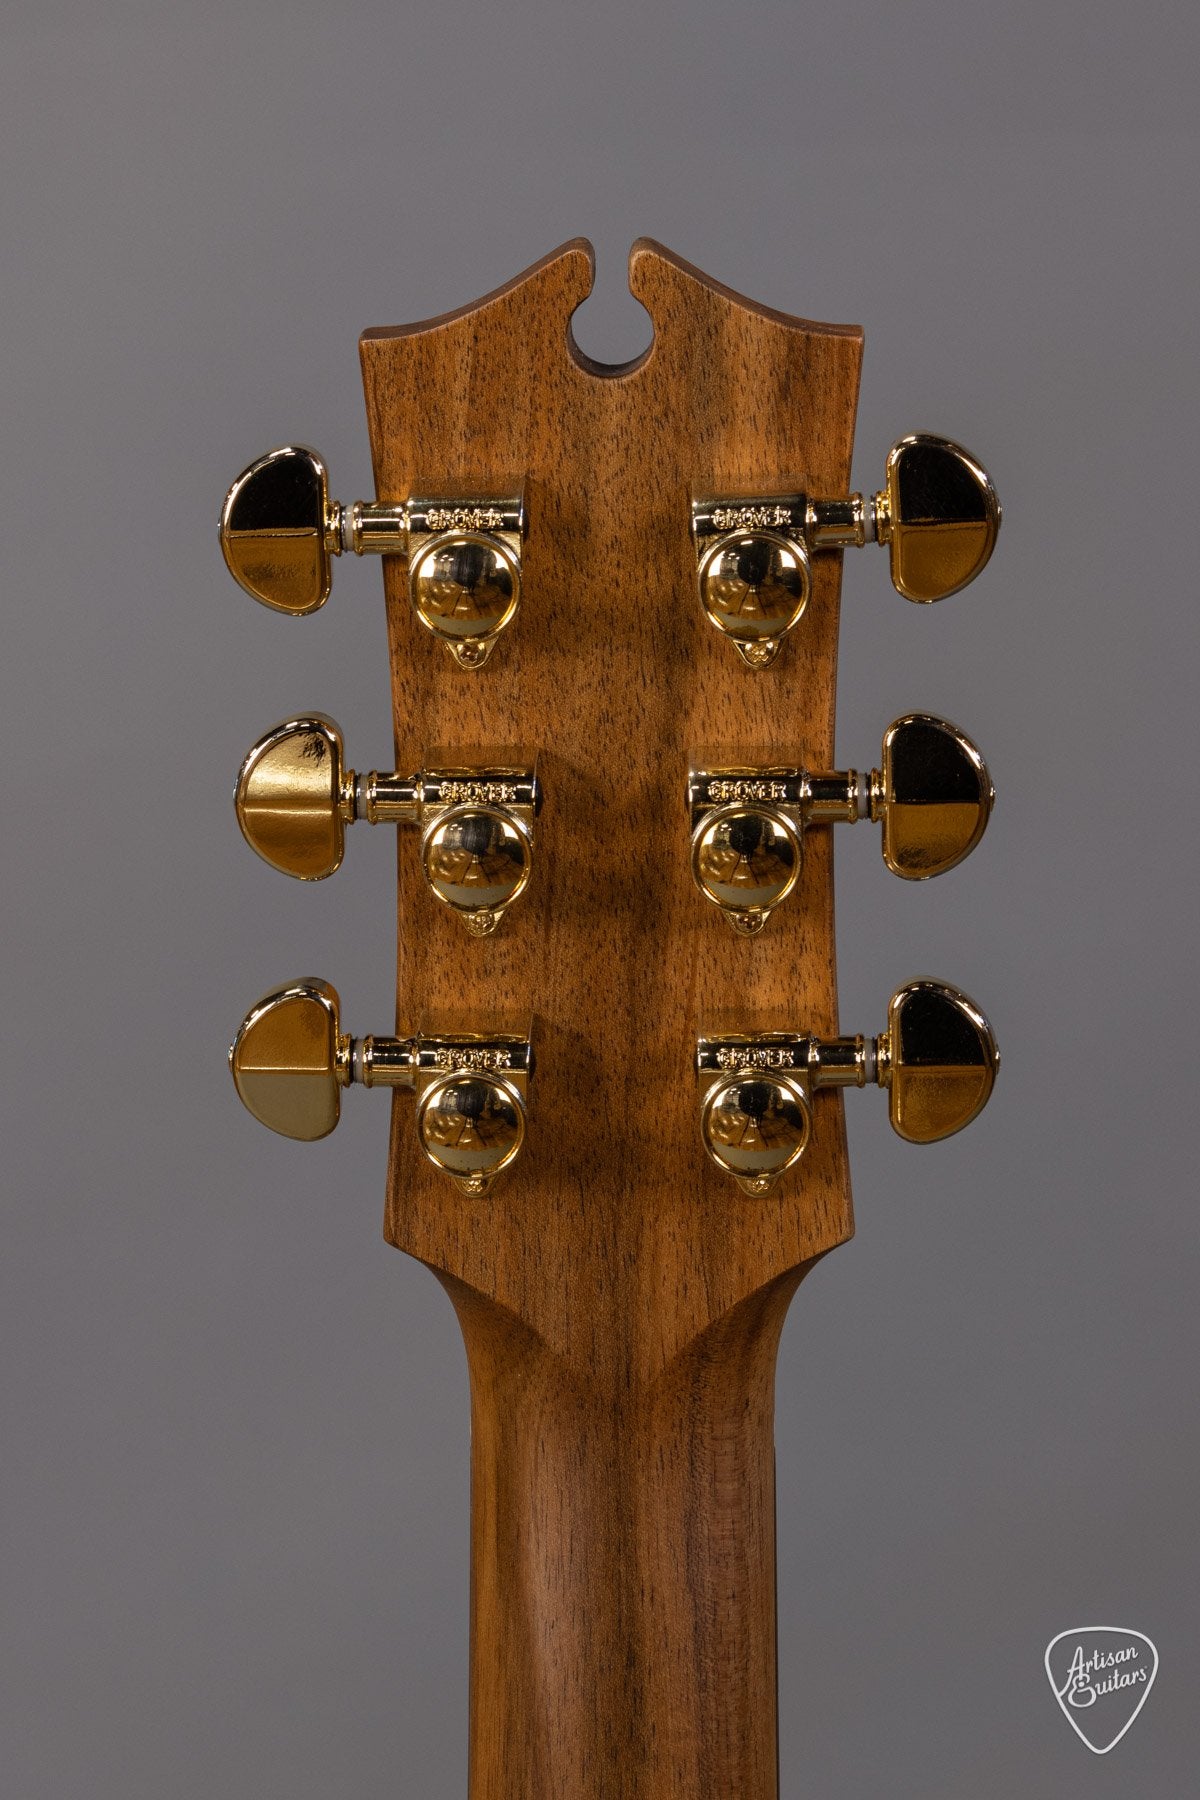 Maton Guitars EA808 Australian - 15066 - Artisan Guitars